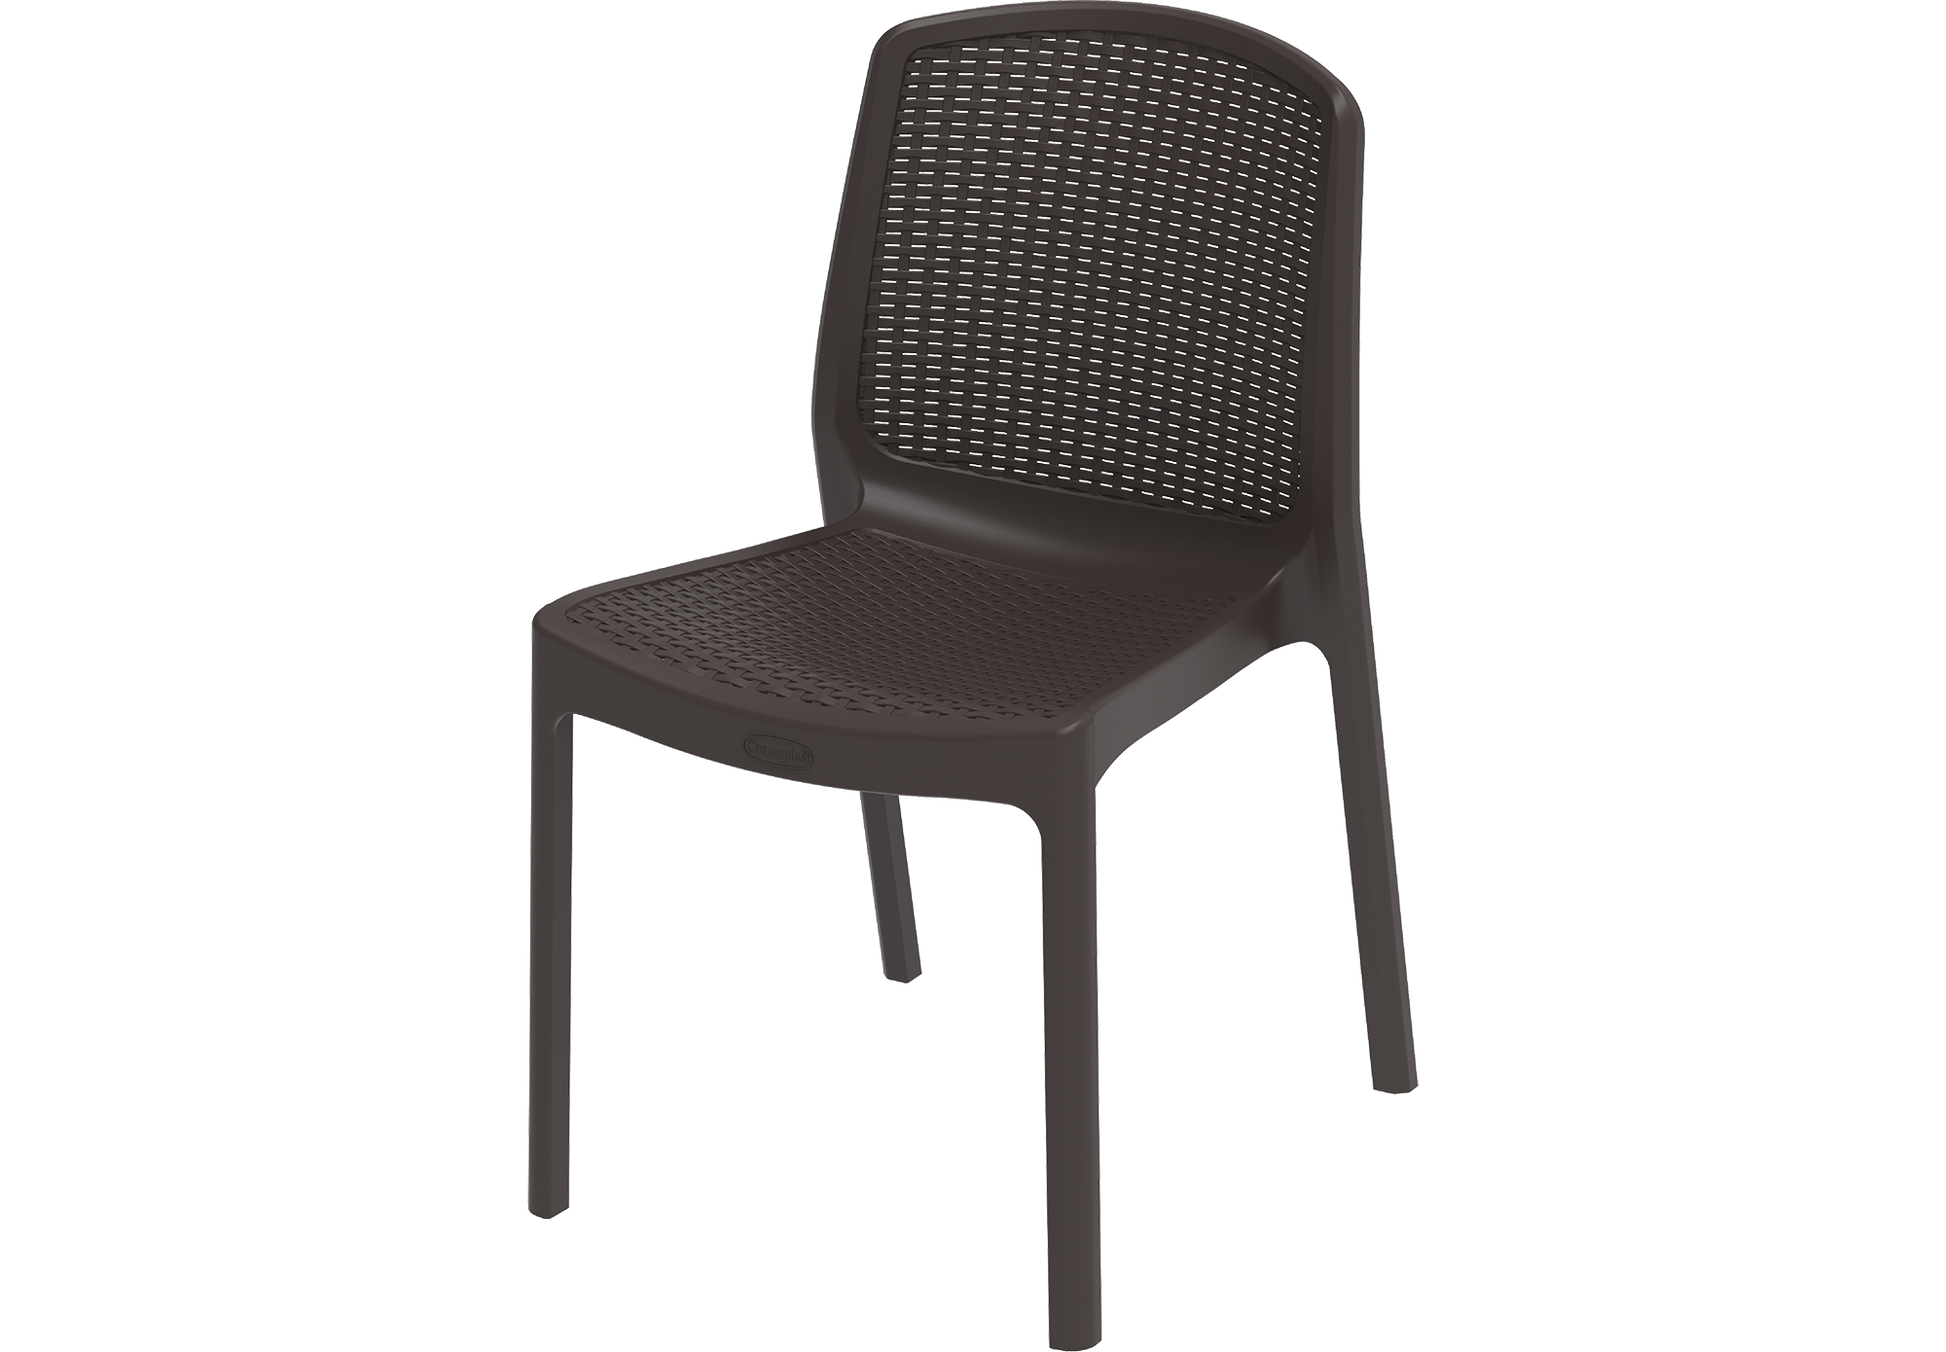 Cedarattan Armless Chair - Cosmoplast Kuwait